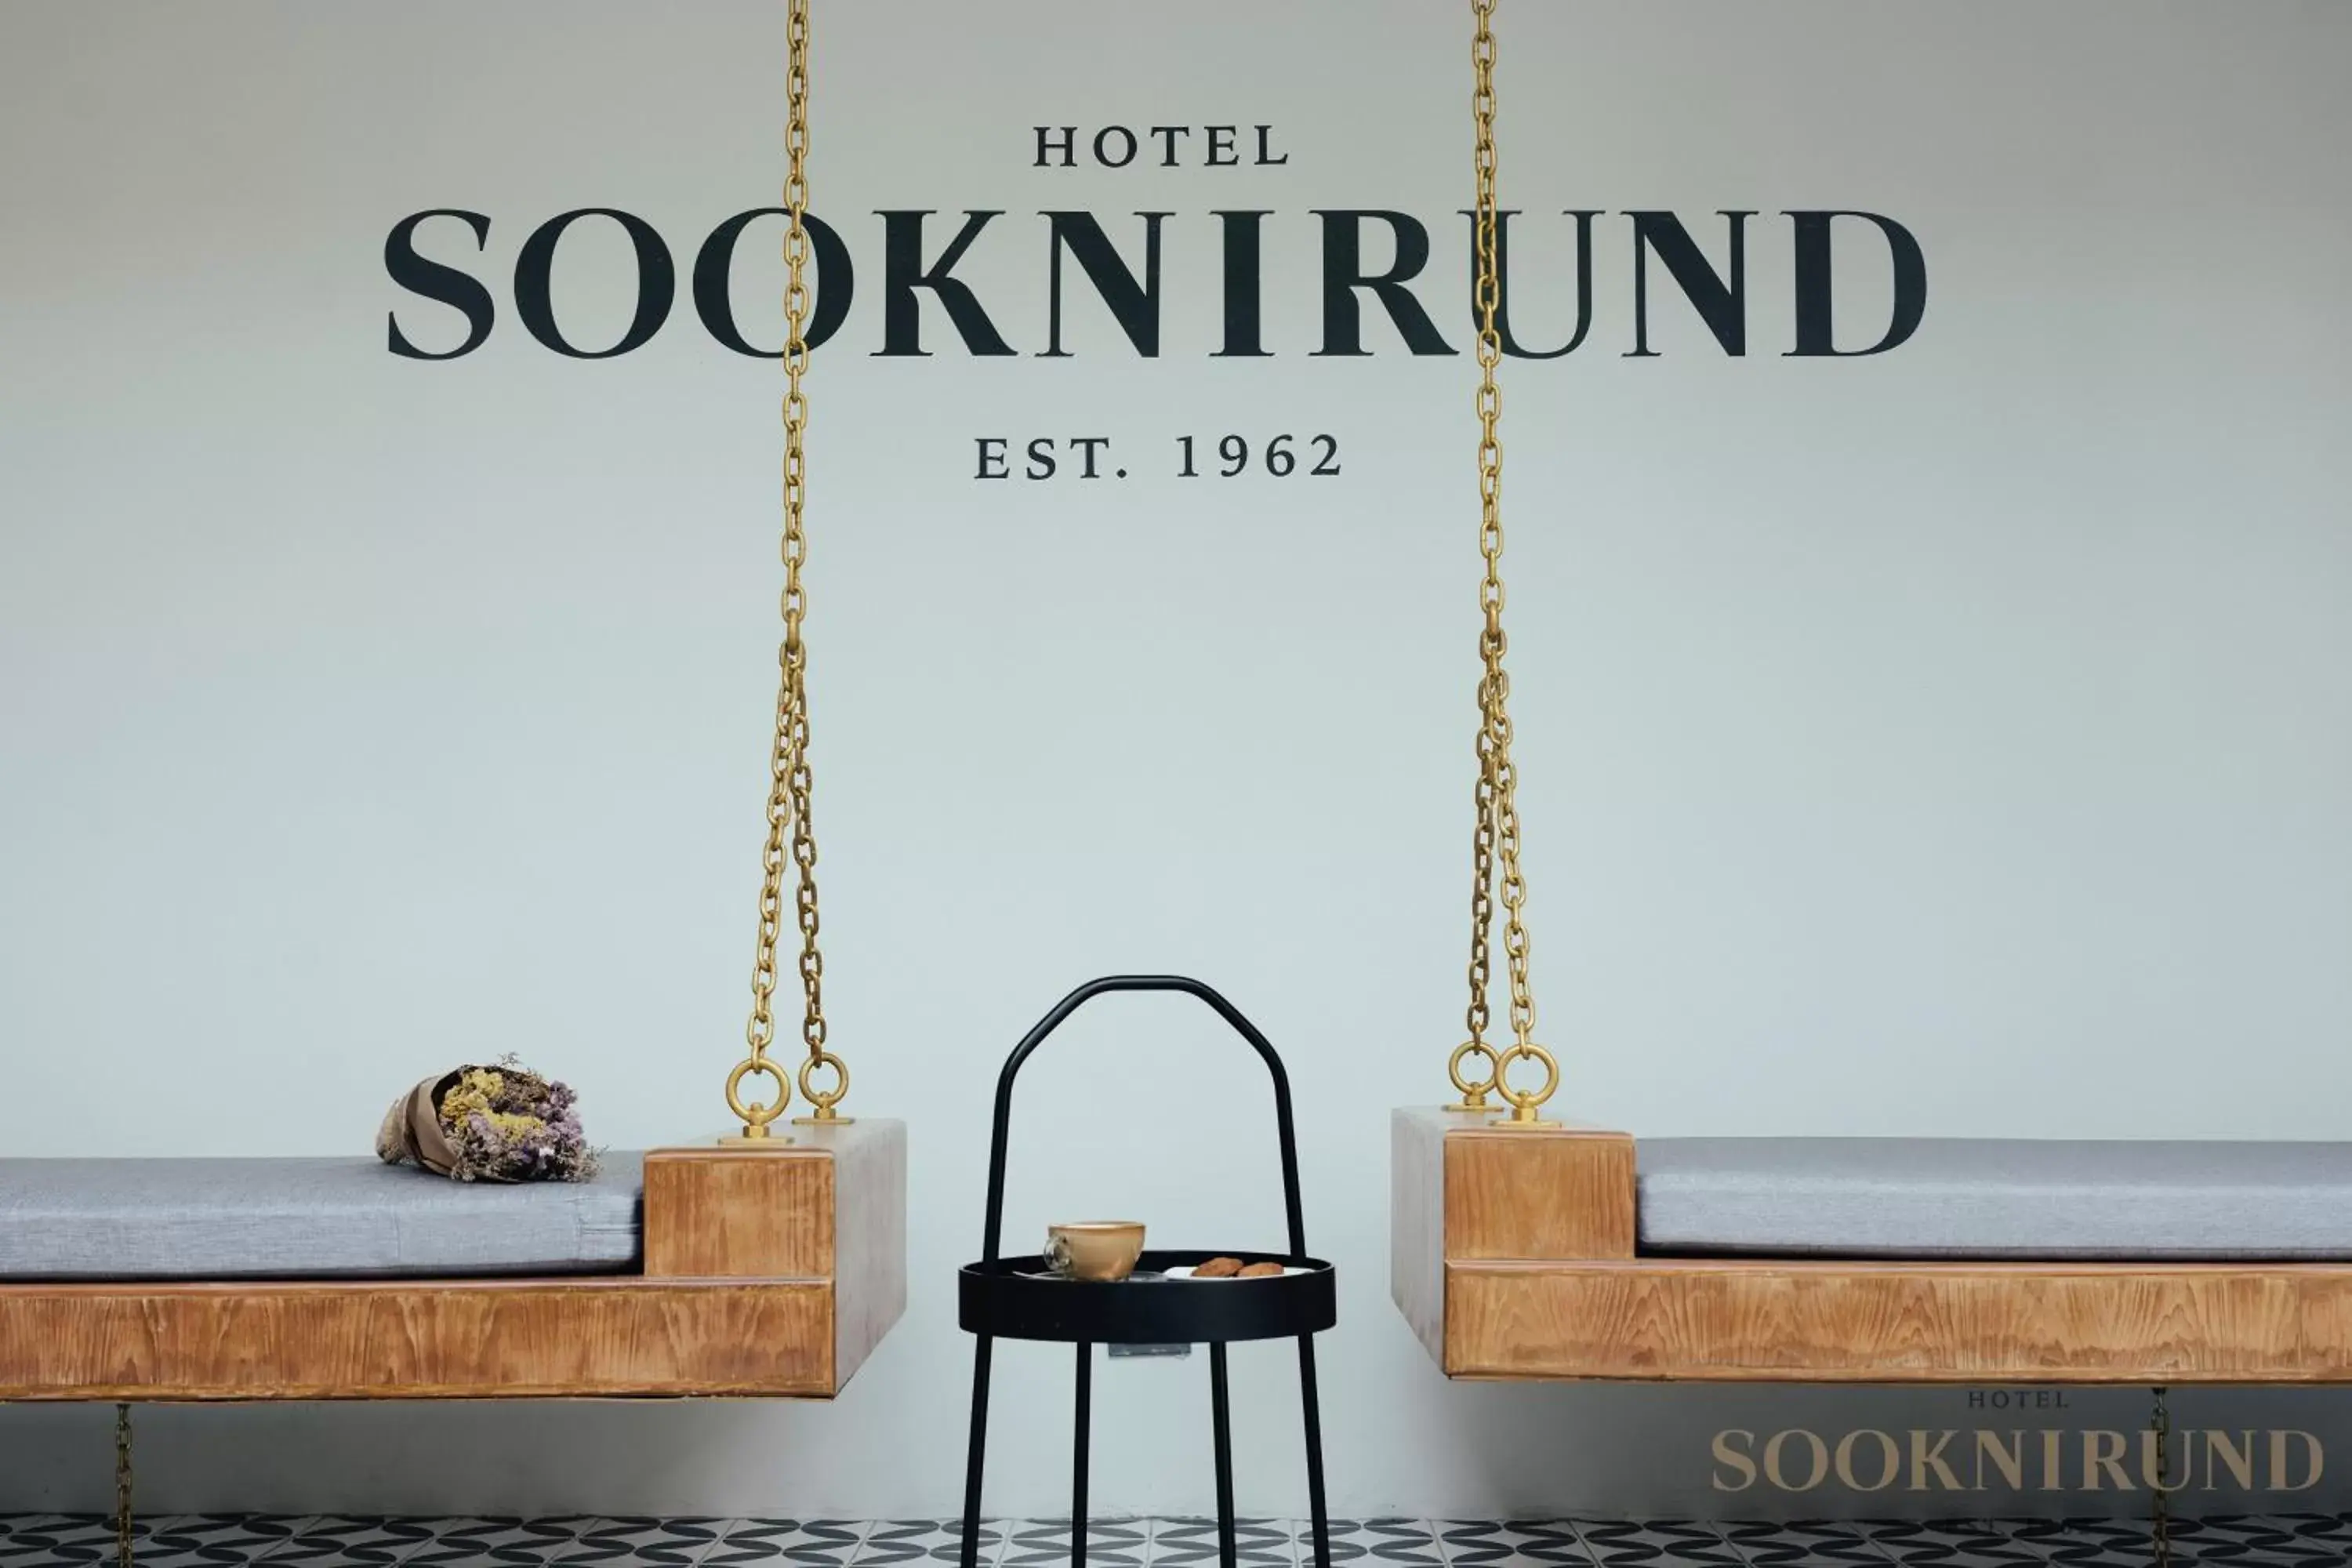 Area and facilities in SOOKNIRUND HOTEL